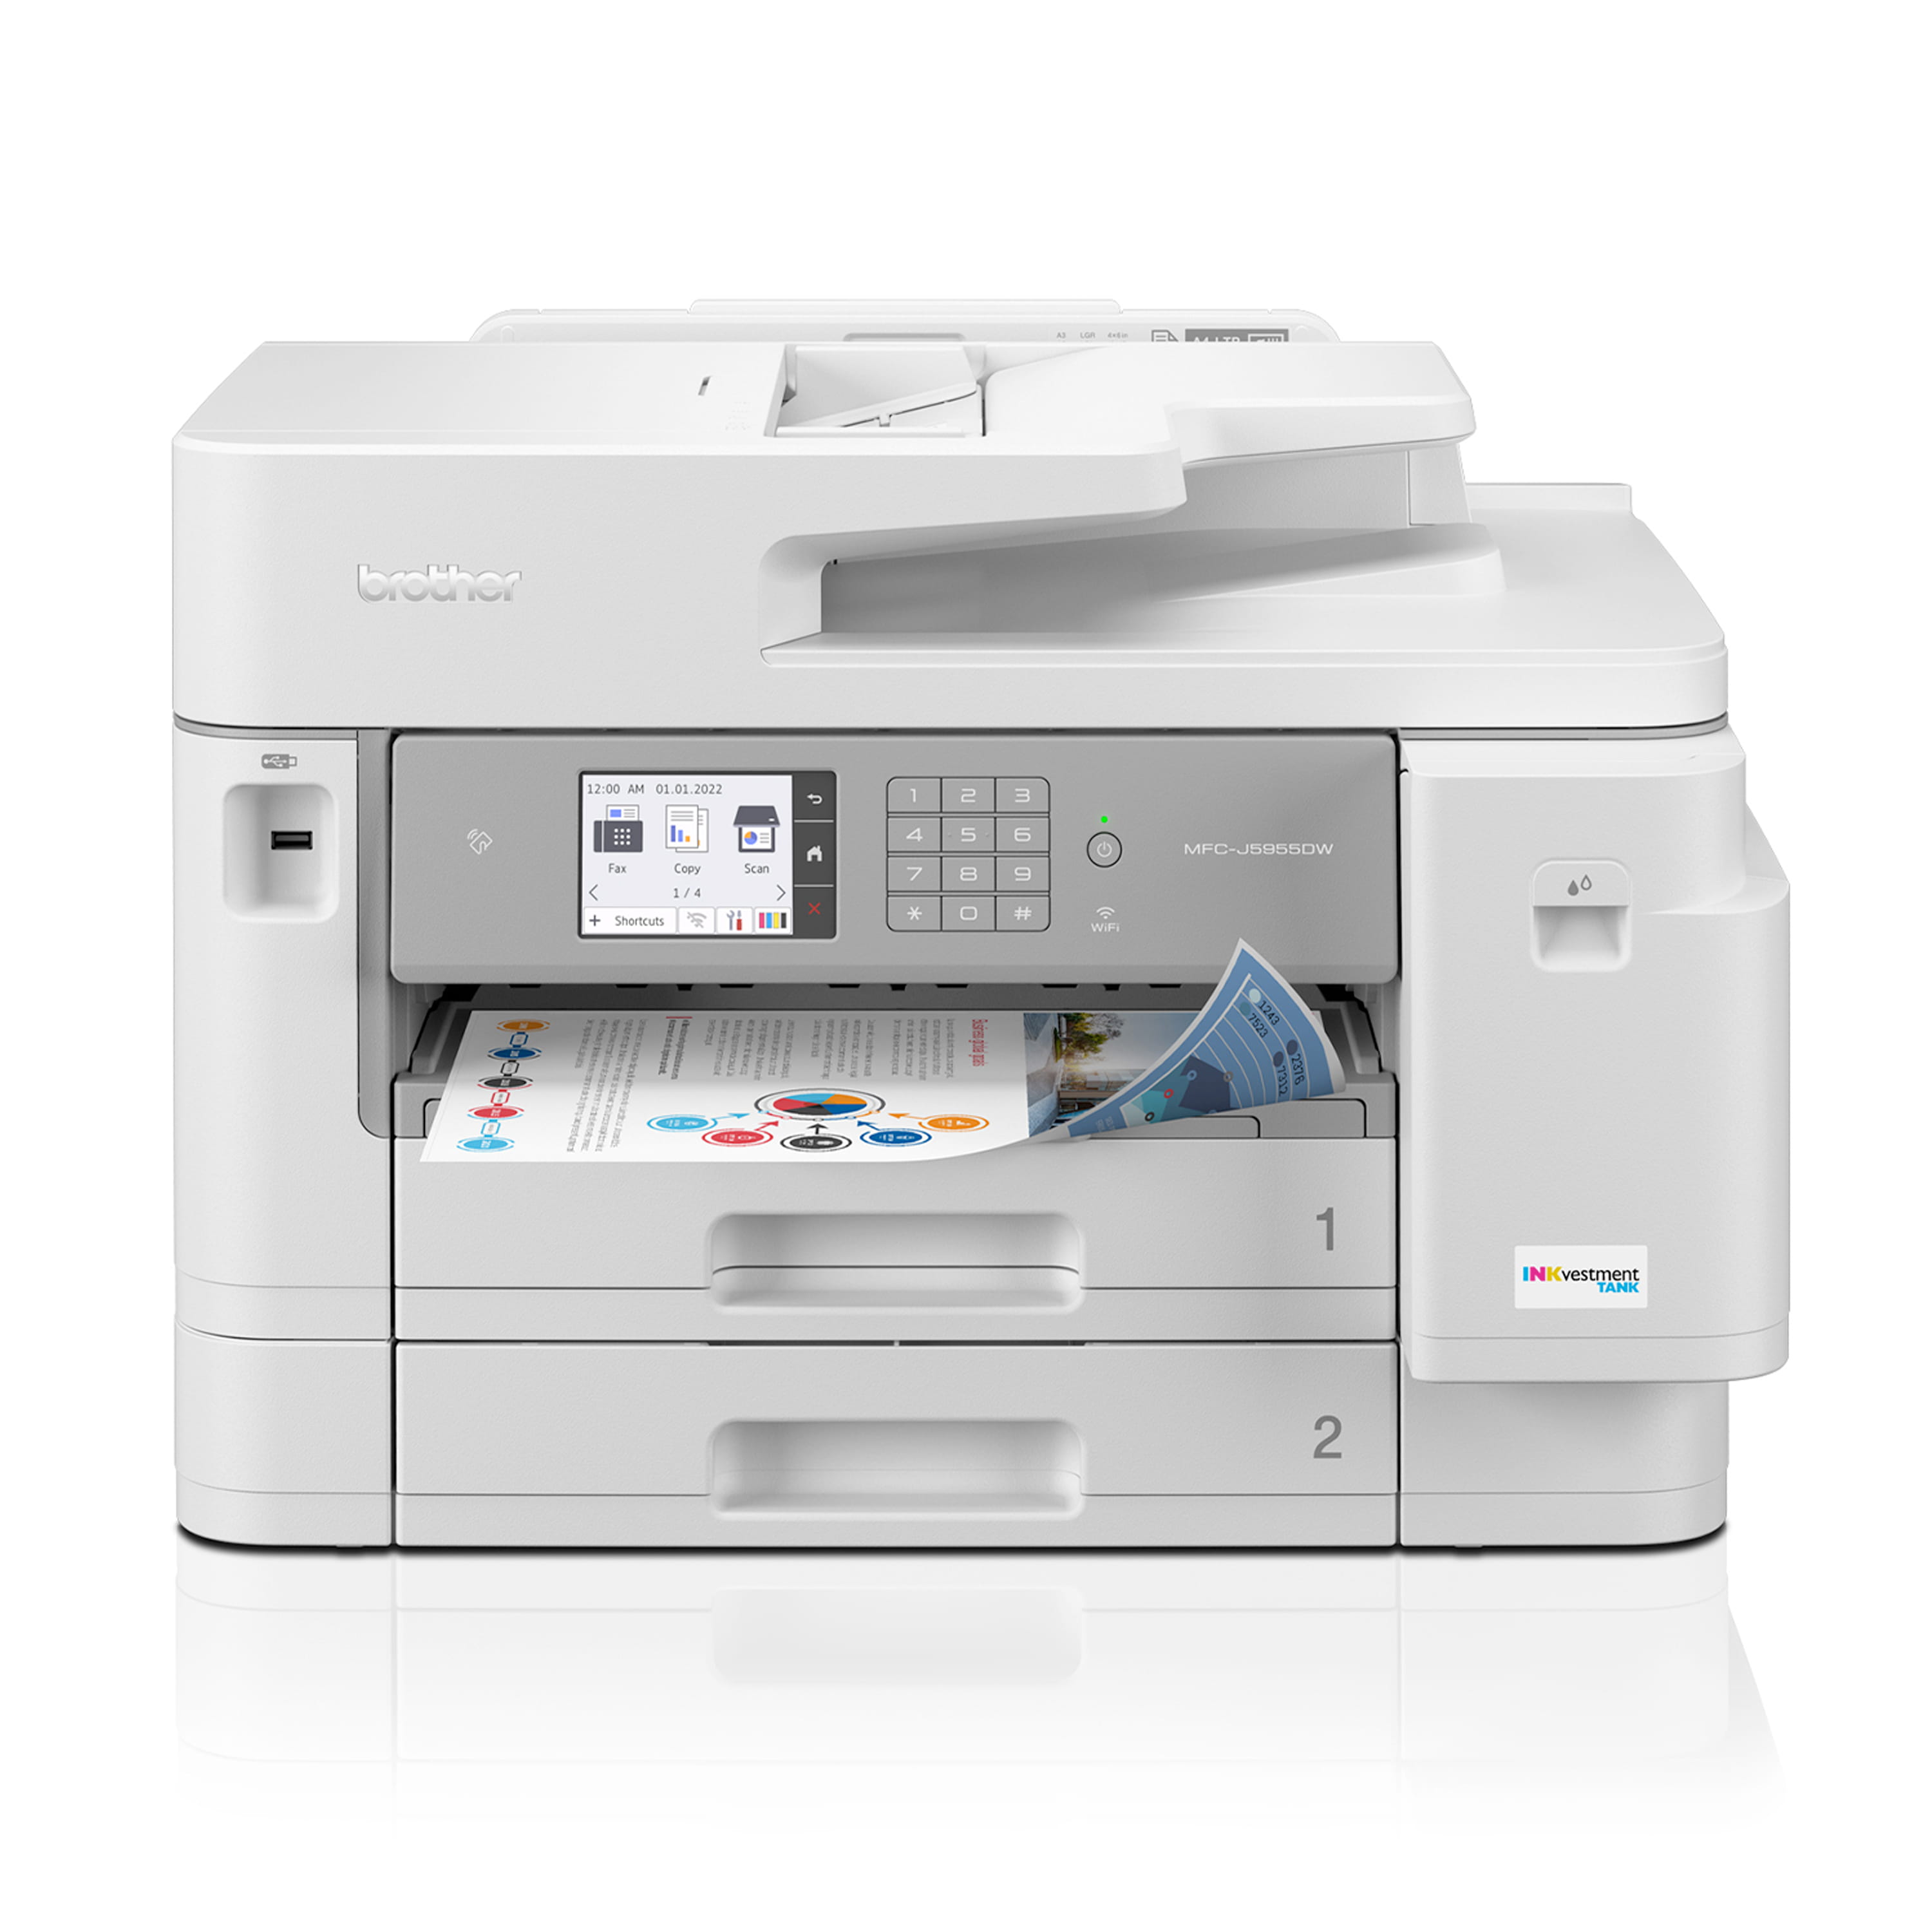 11x17 Printers, Ledger Printers and Printer Scanners, Tabloid Printers